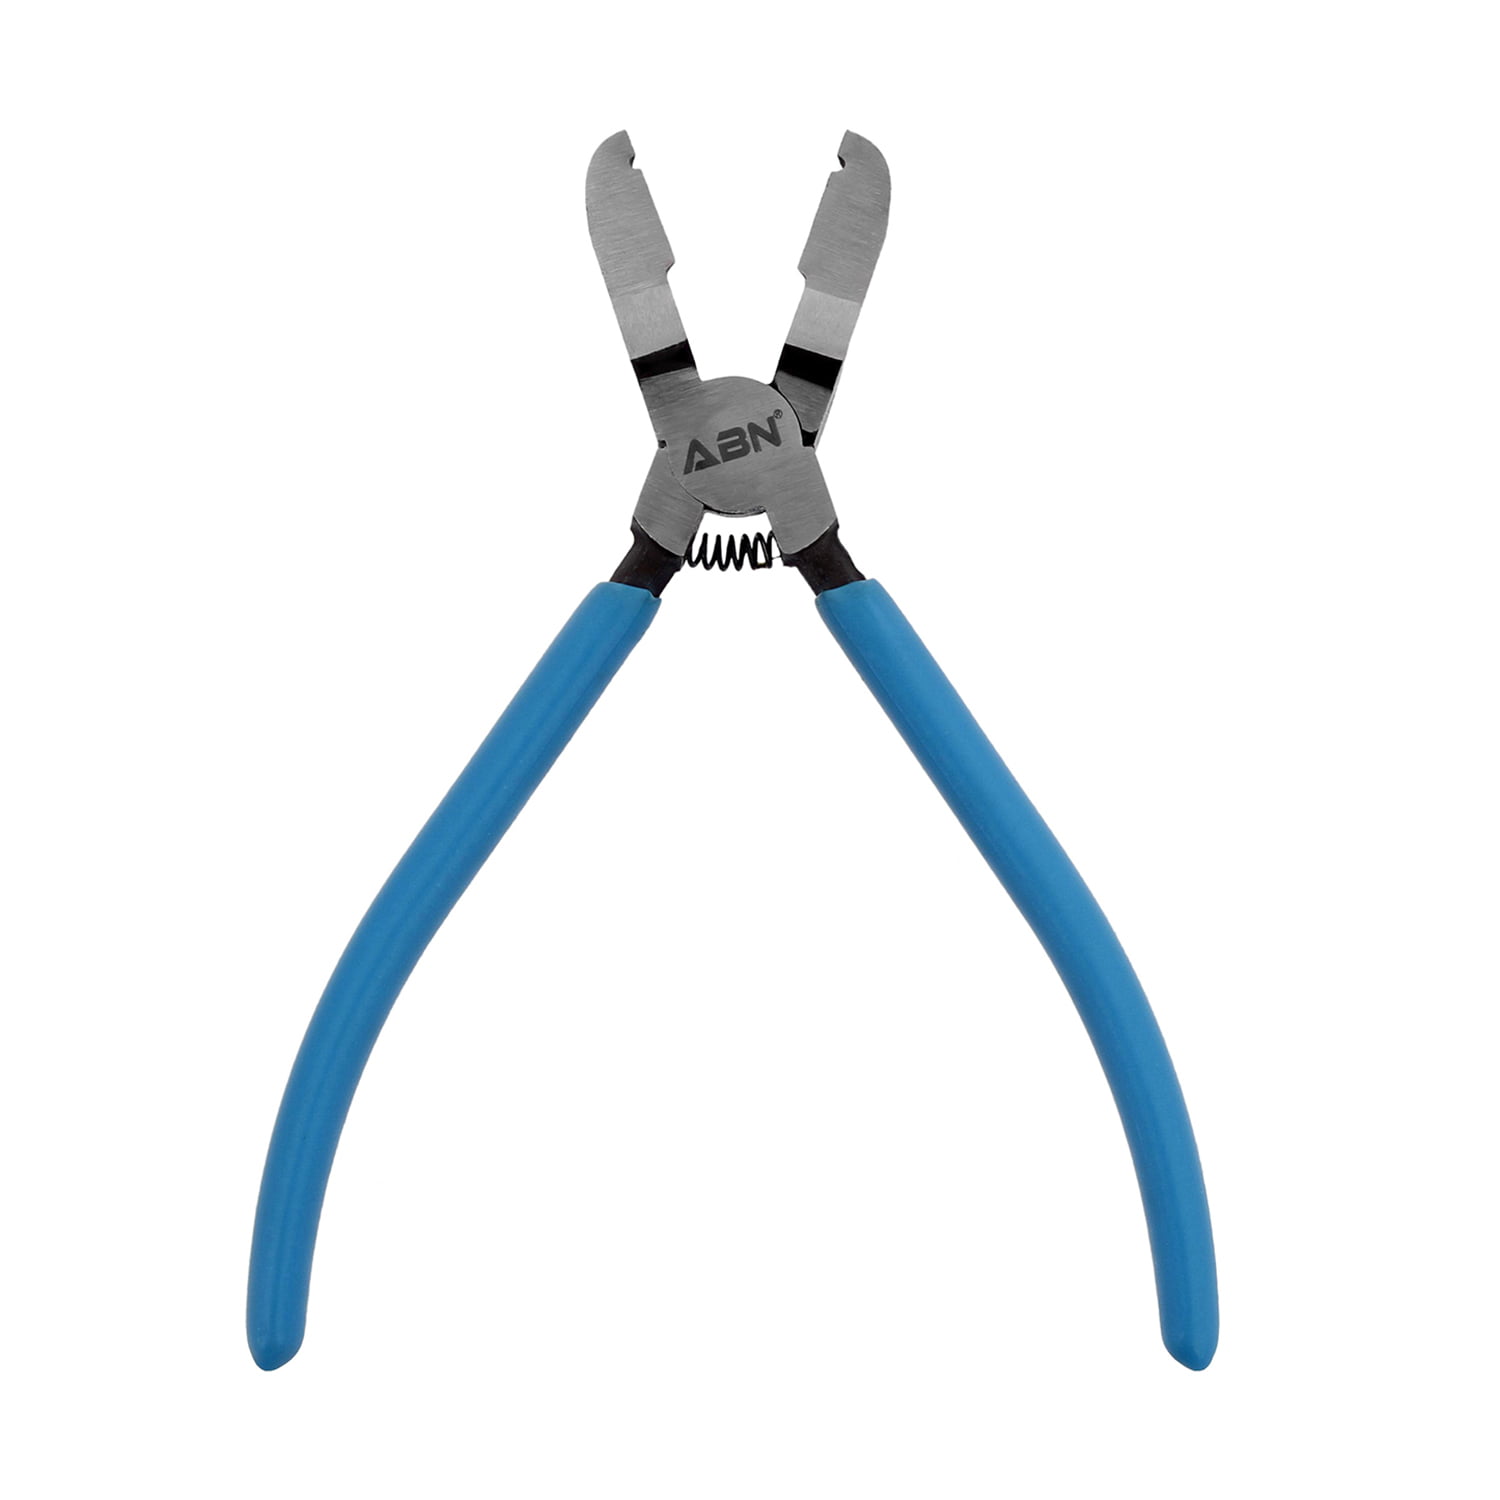 6" 45# Flush Cut Side Cutters Plier Cutting Pliers Cutter Handle Wire PVC R1N1 